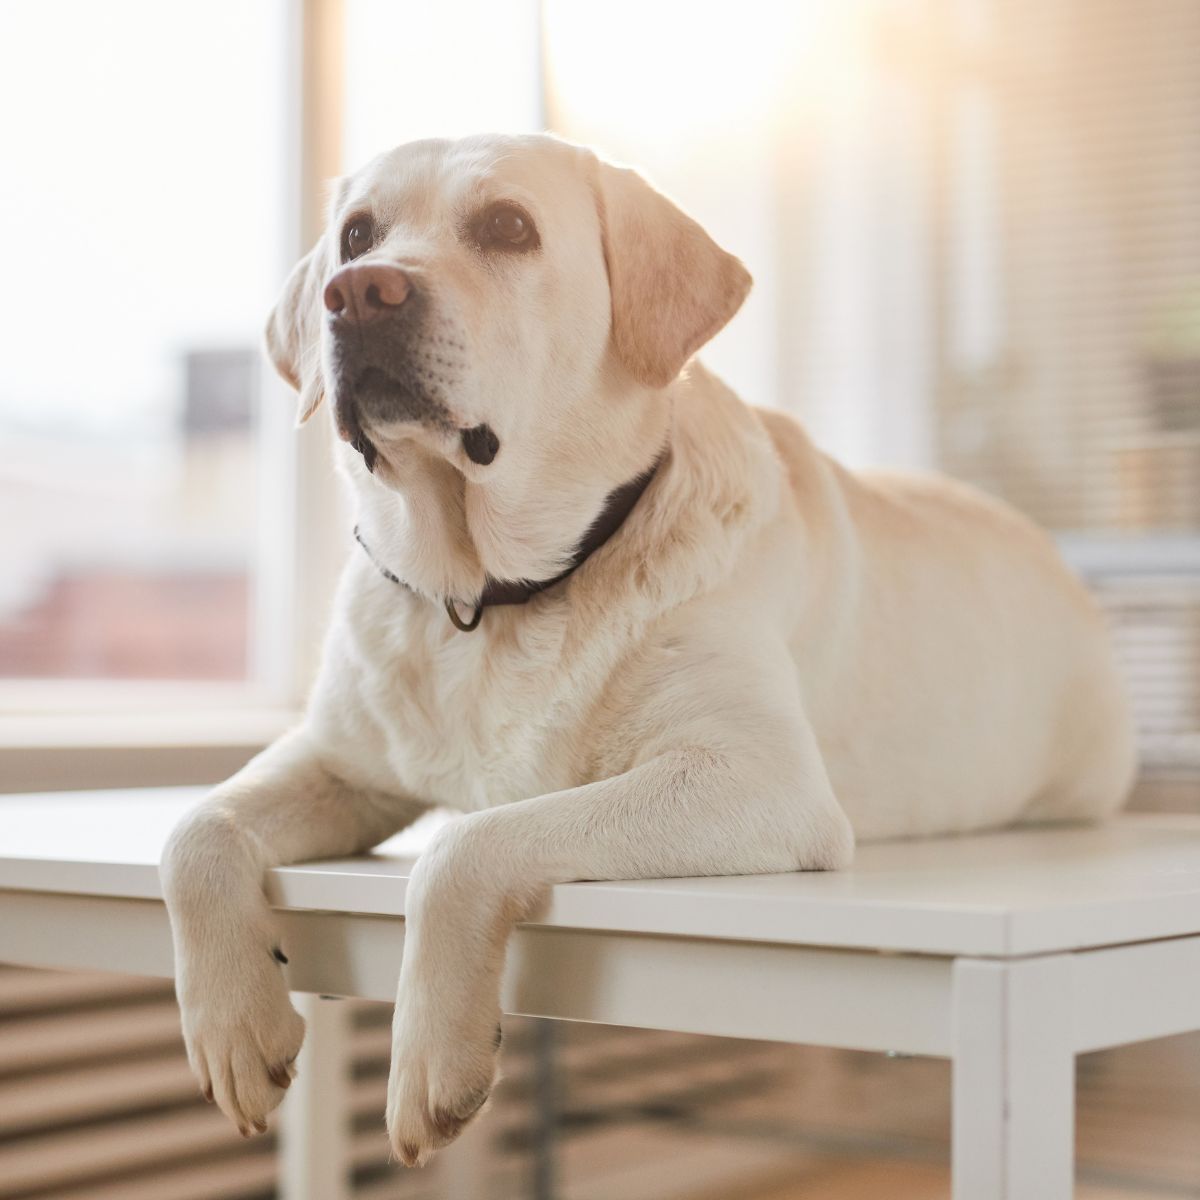 Labrador dog at vet clinic